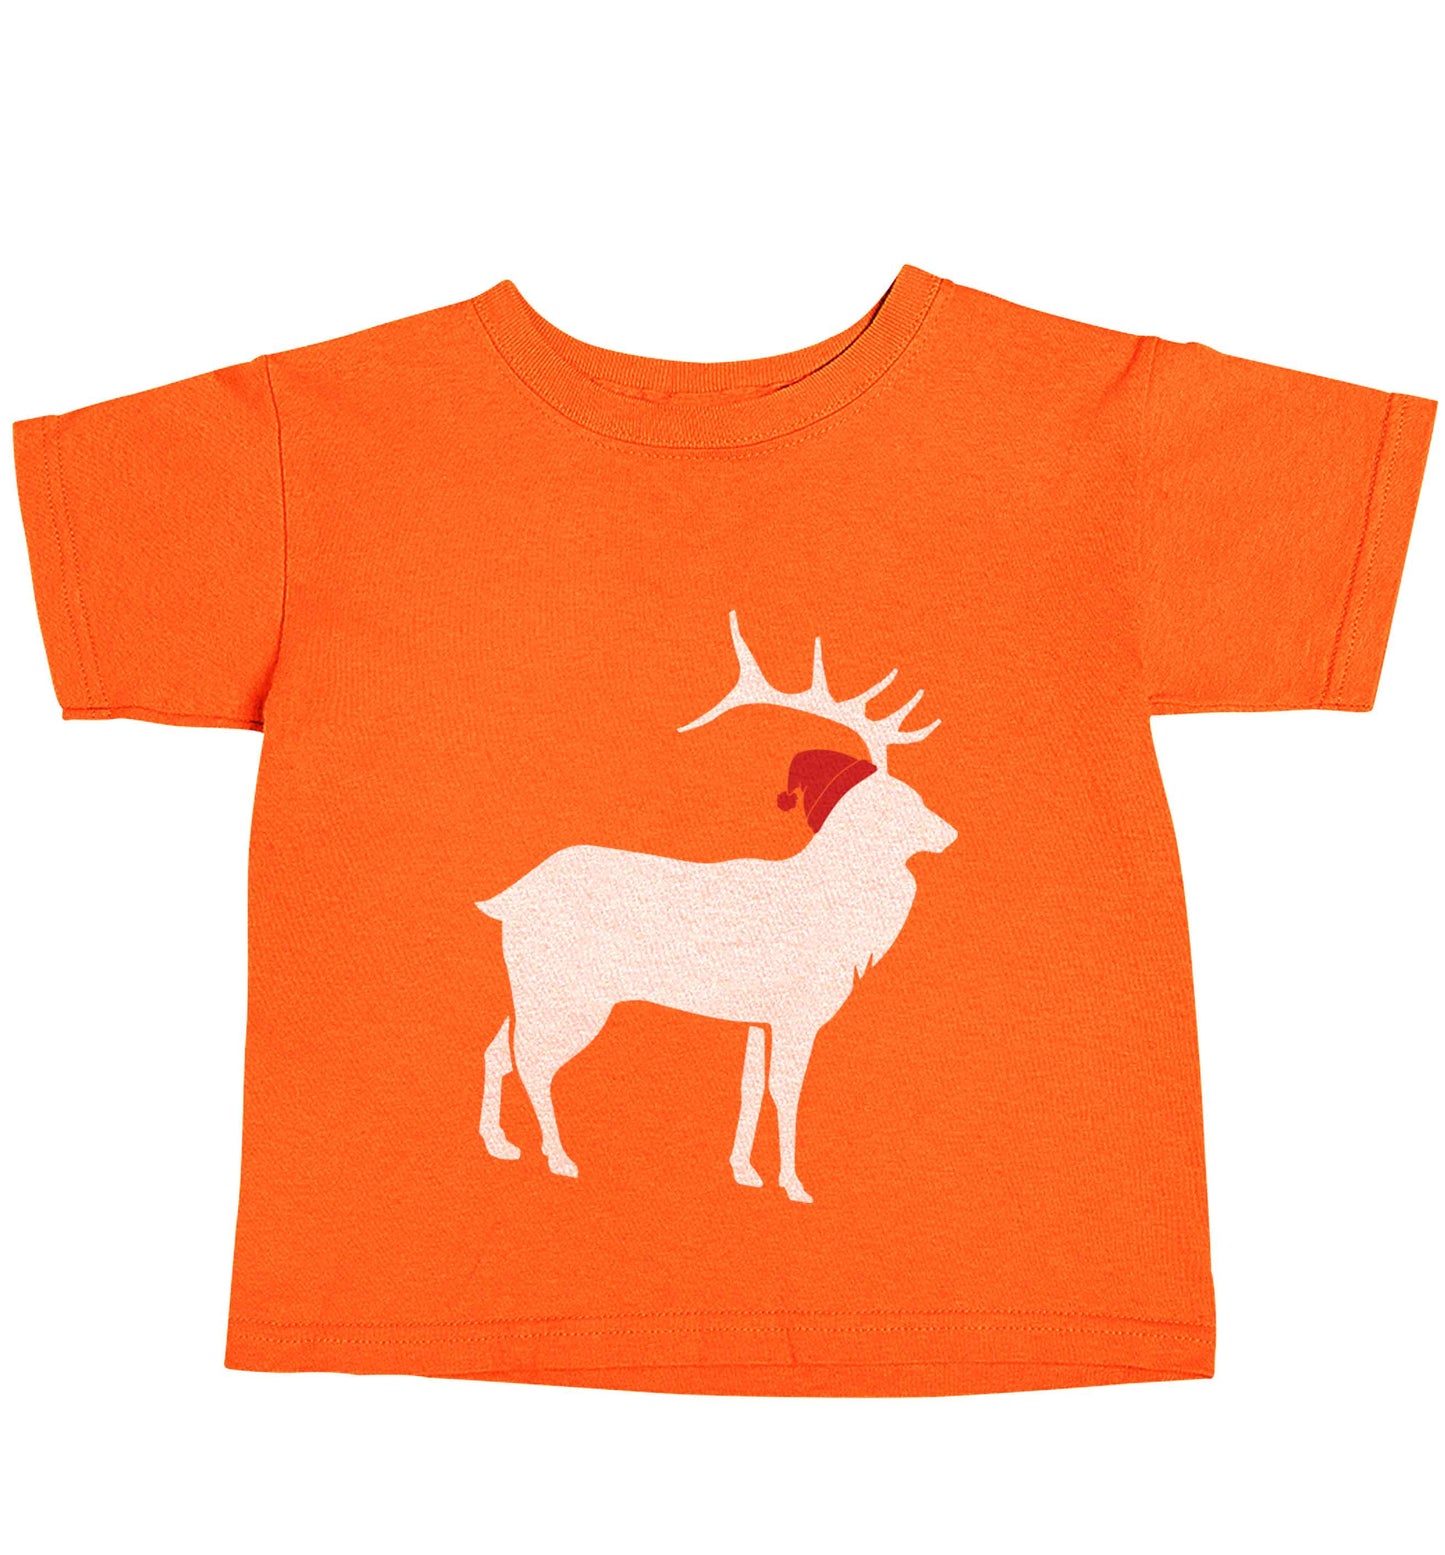 Green stag Santa orange baby toddler Tshirt 2 Years